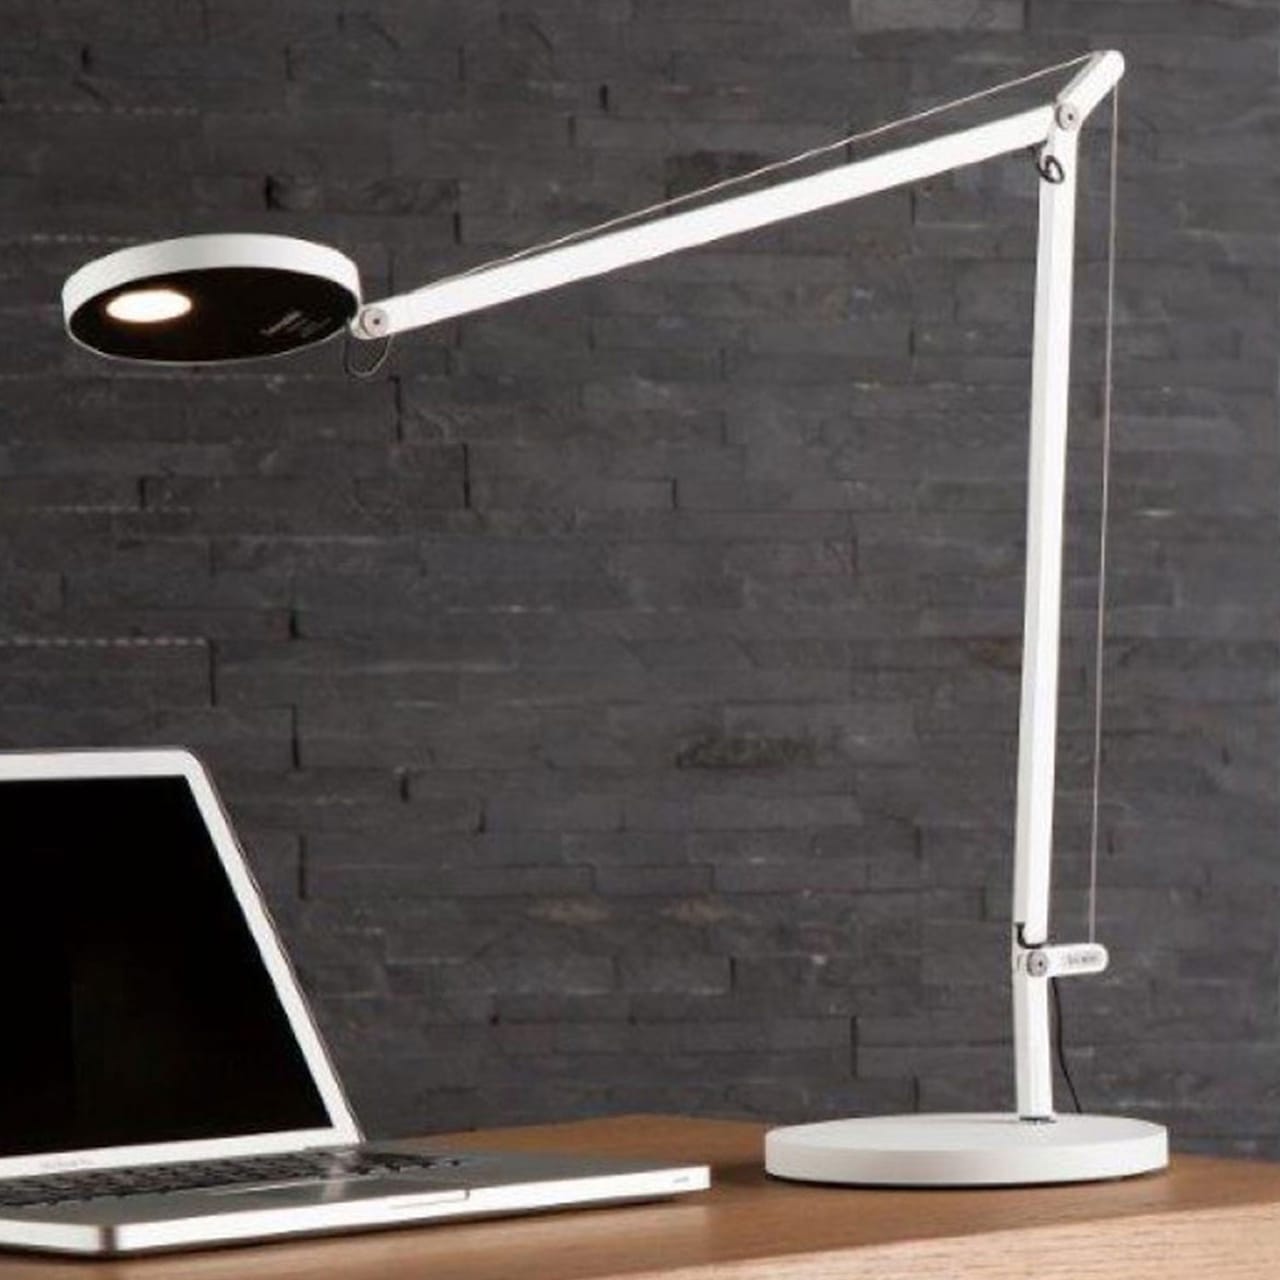 Demetra Desk Lamp